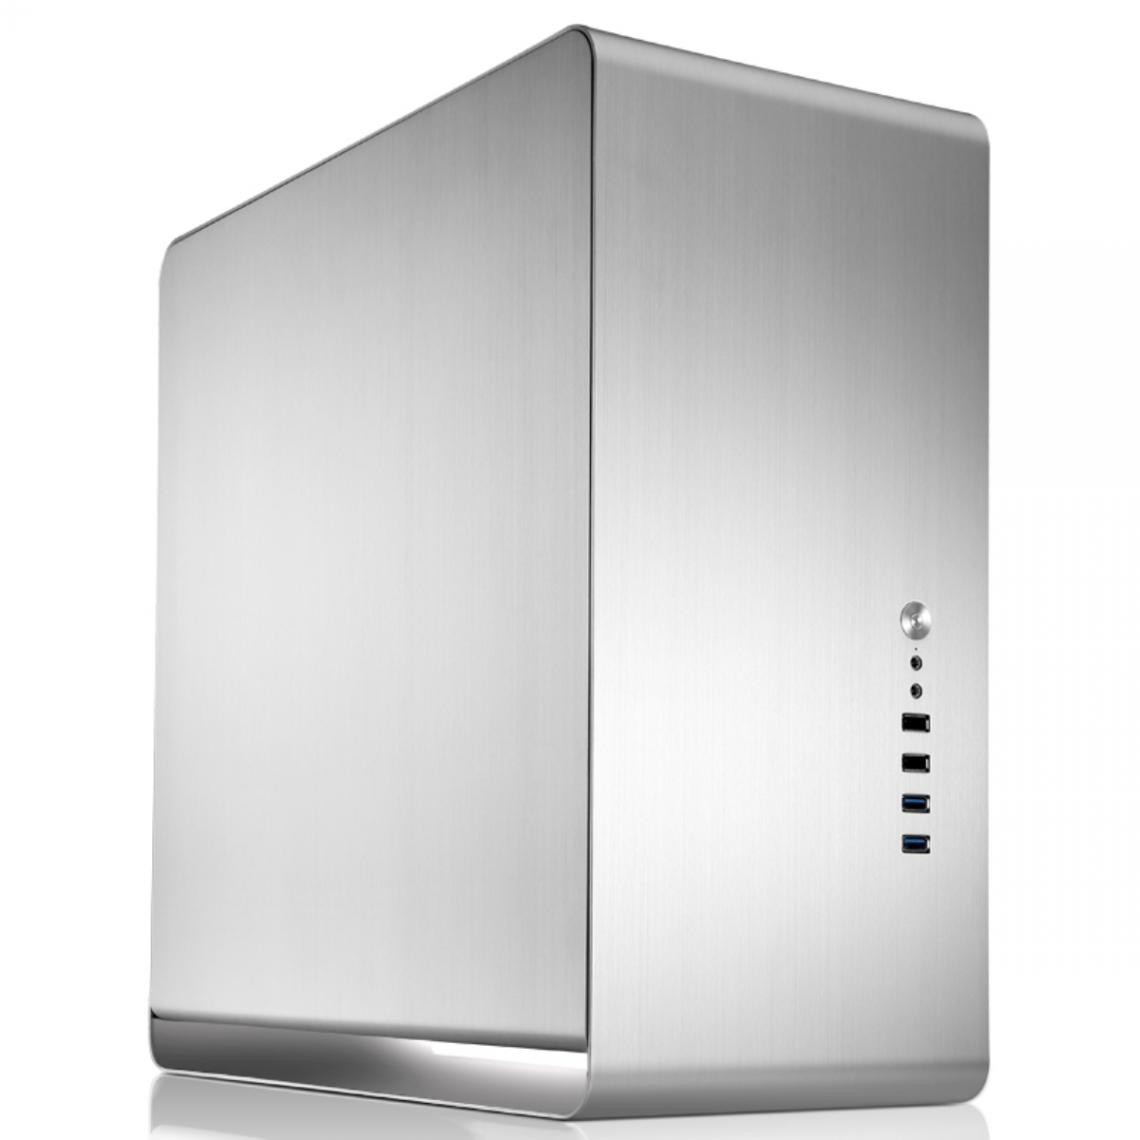 Jonsbo - UMX4 Silver - Sans fenêtre - Boitier PC